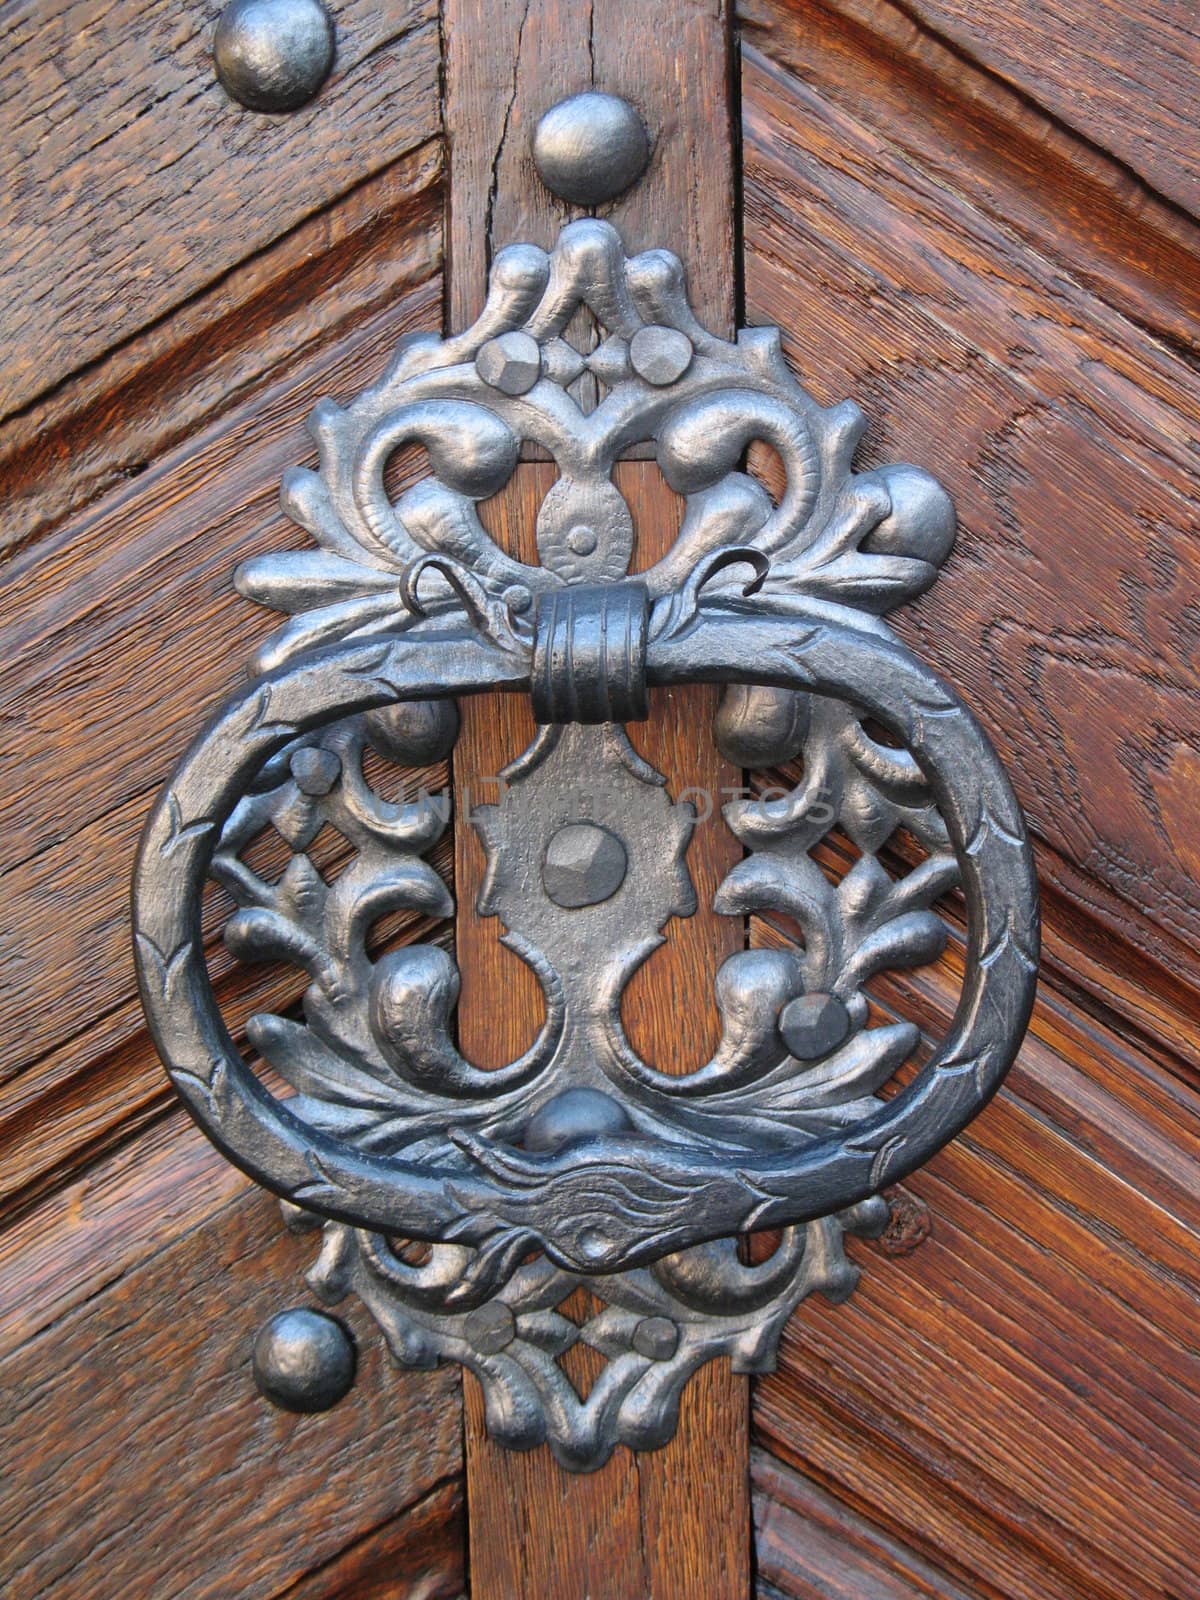 Ancient doorknob by Vitamin